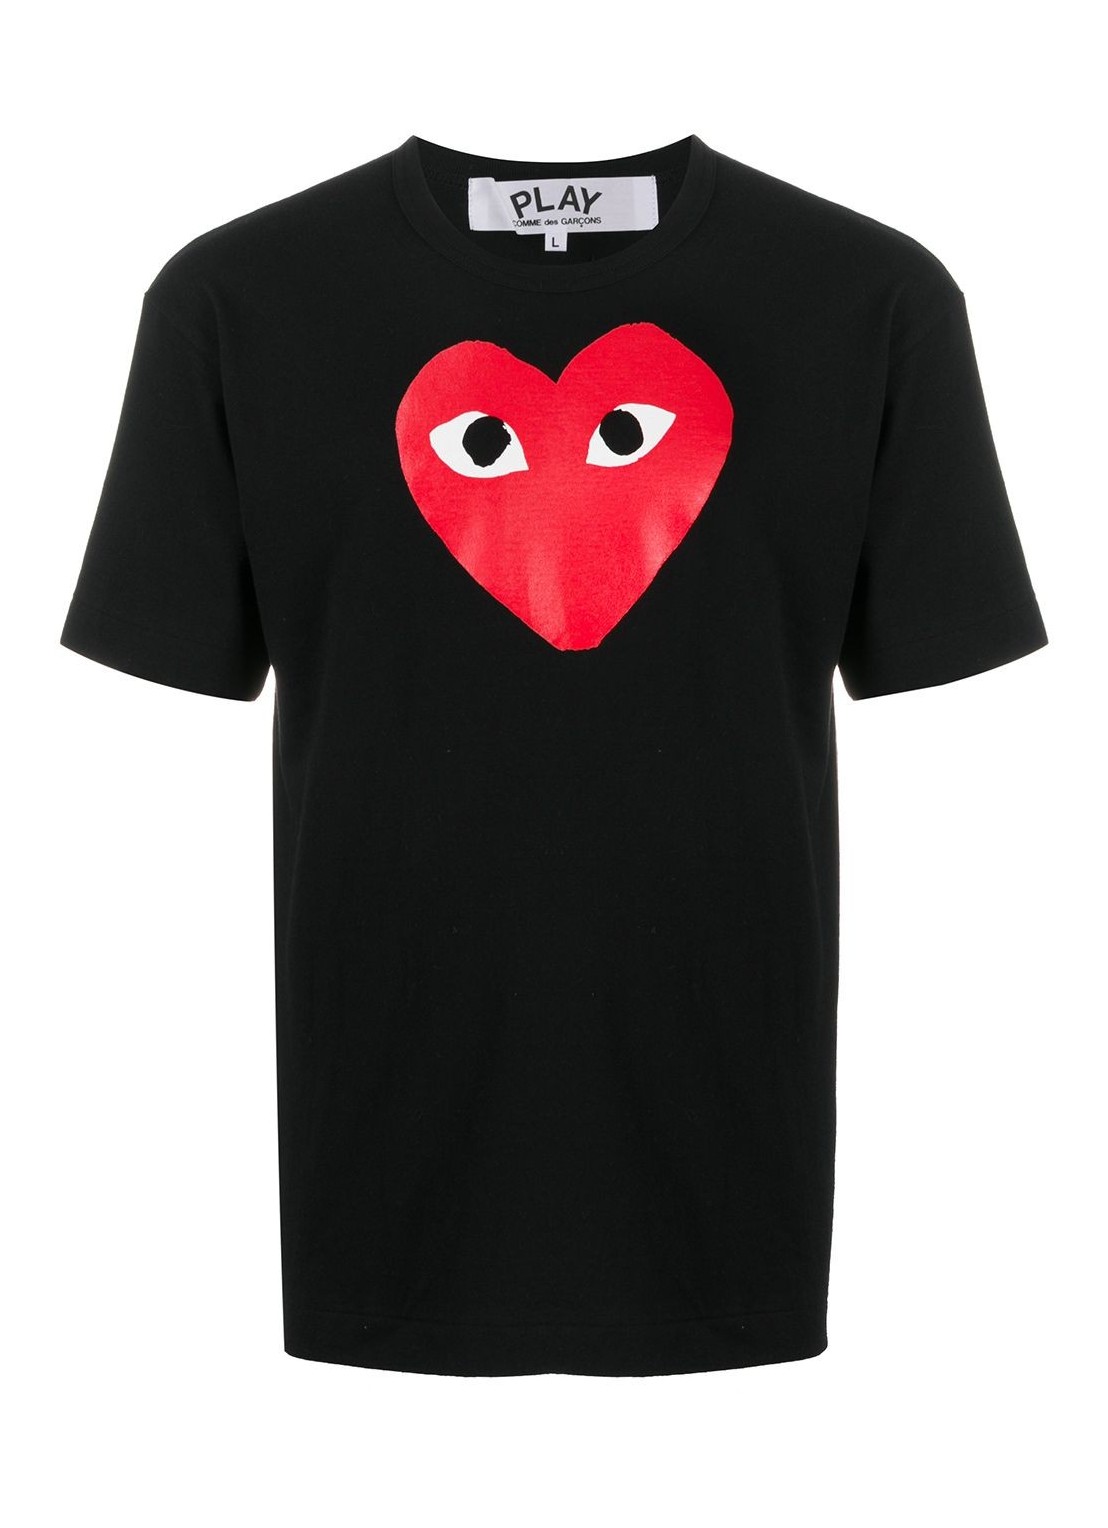 Camiseta comme des garcons t-shirt man play t-shirt men - red heart p1t112 black talla XL
 